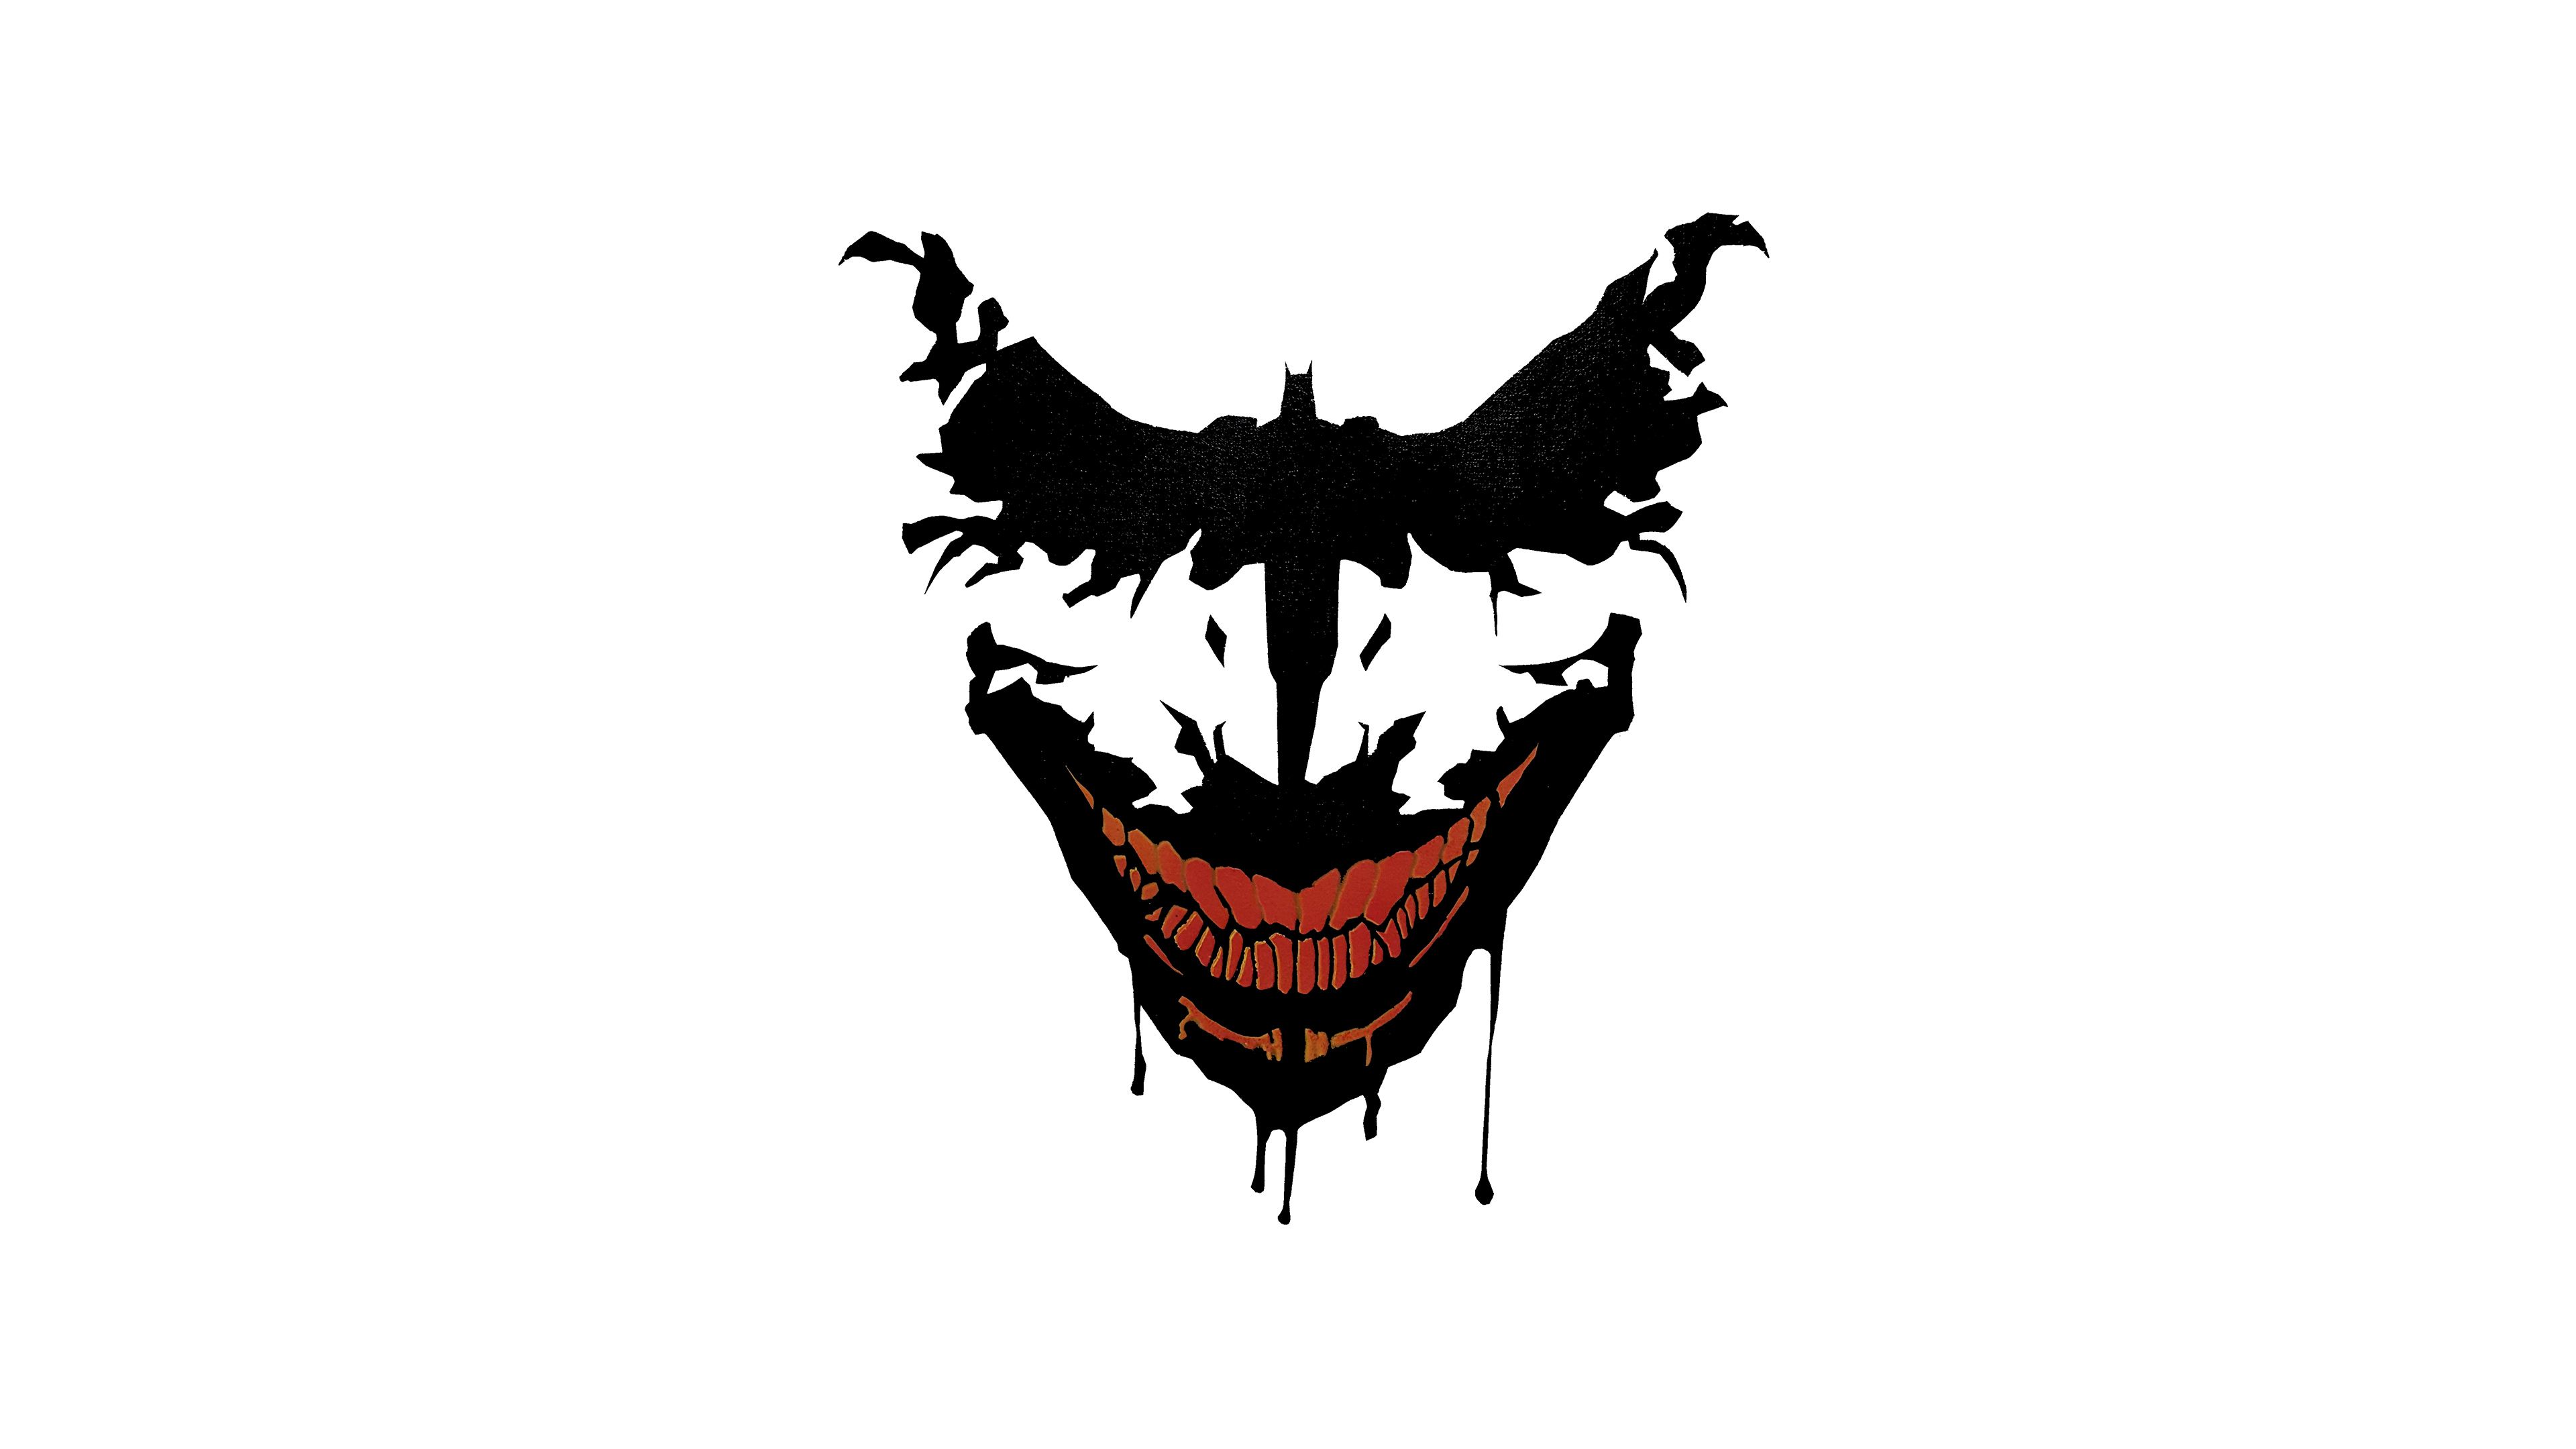 Joker Bat Art, HD Superheroes, 4k Wallpaper, Image, Background, Photo and Picture